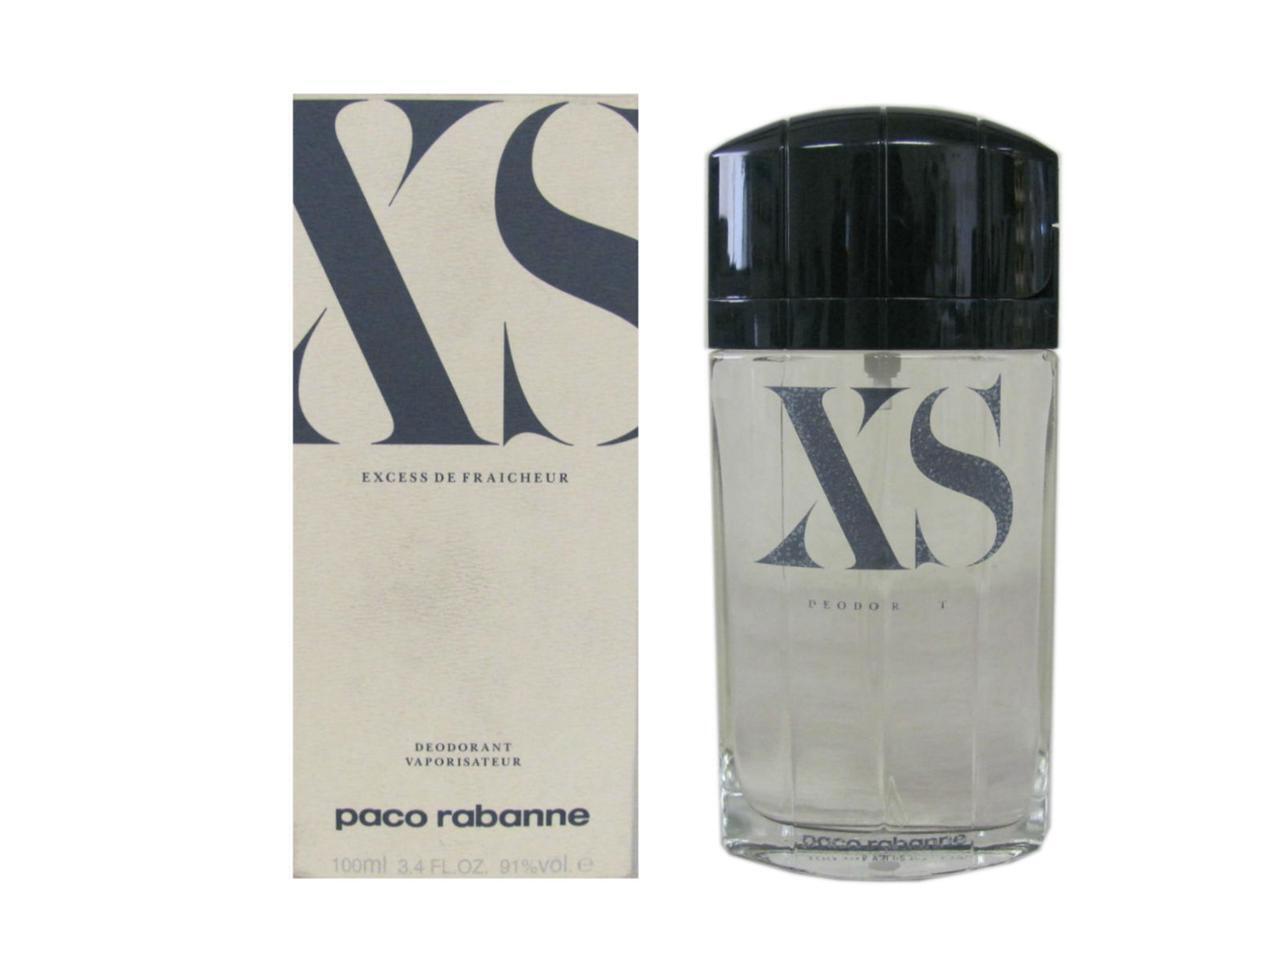 XS Excess De Fraicheur by Paco Rabanne Men 3.4 oz. Deodorant Spray (Damage Box) - $39.95